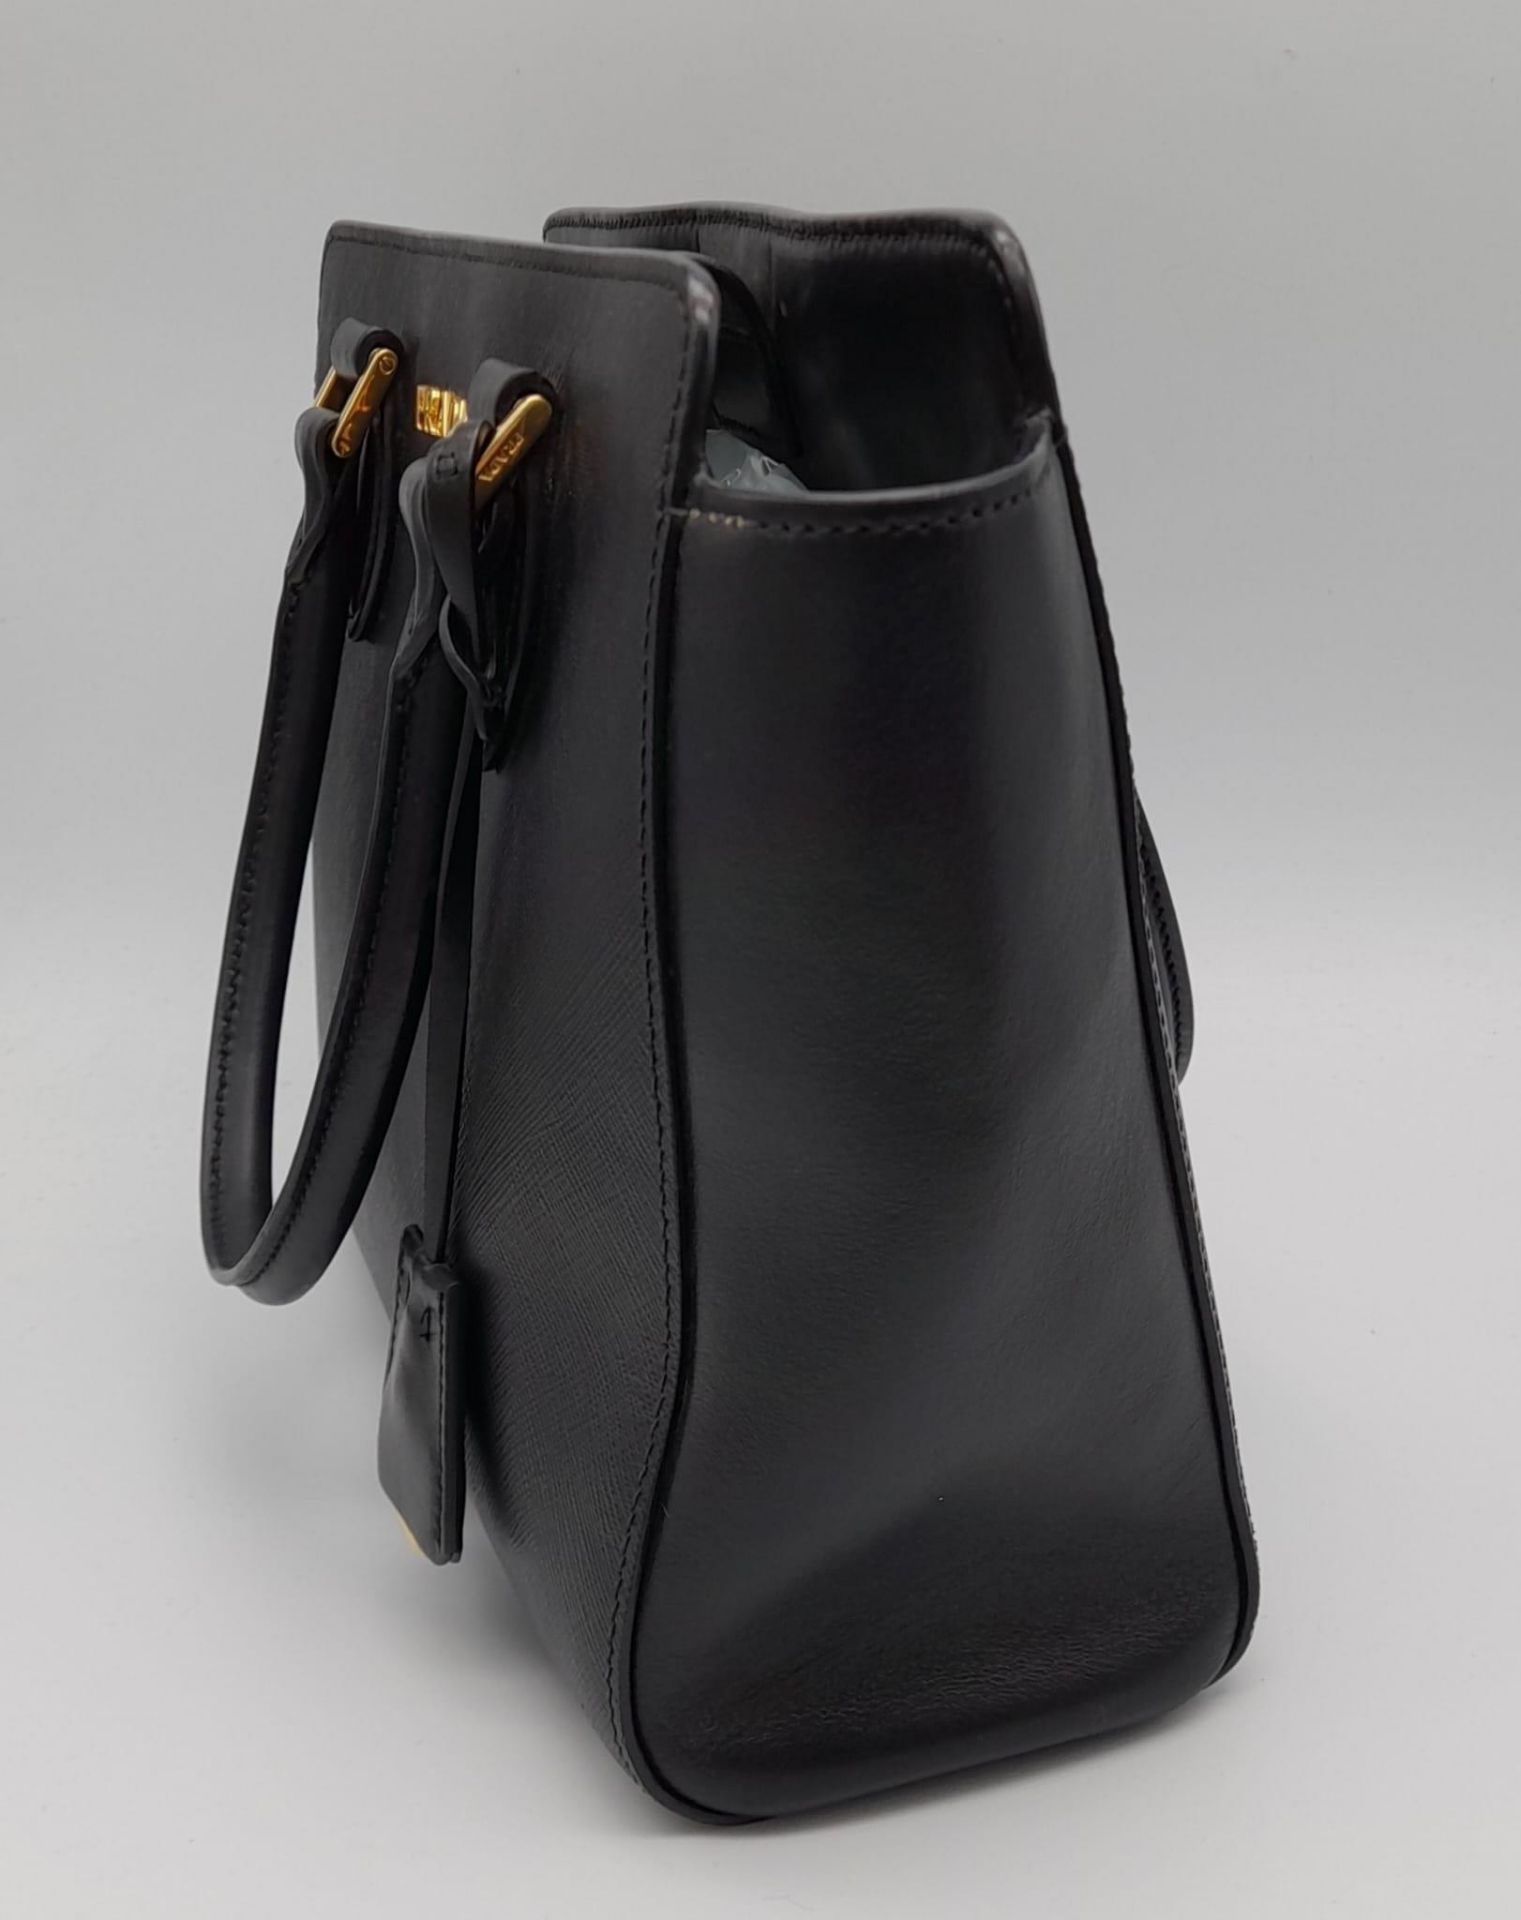 A Prada Black Leather Handbag with Adjustable Shoulder Strap. Textured leather with gold-tone - Bild 7 aus 8